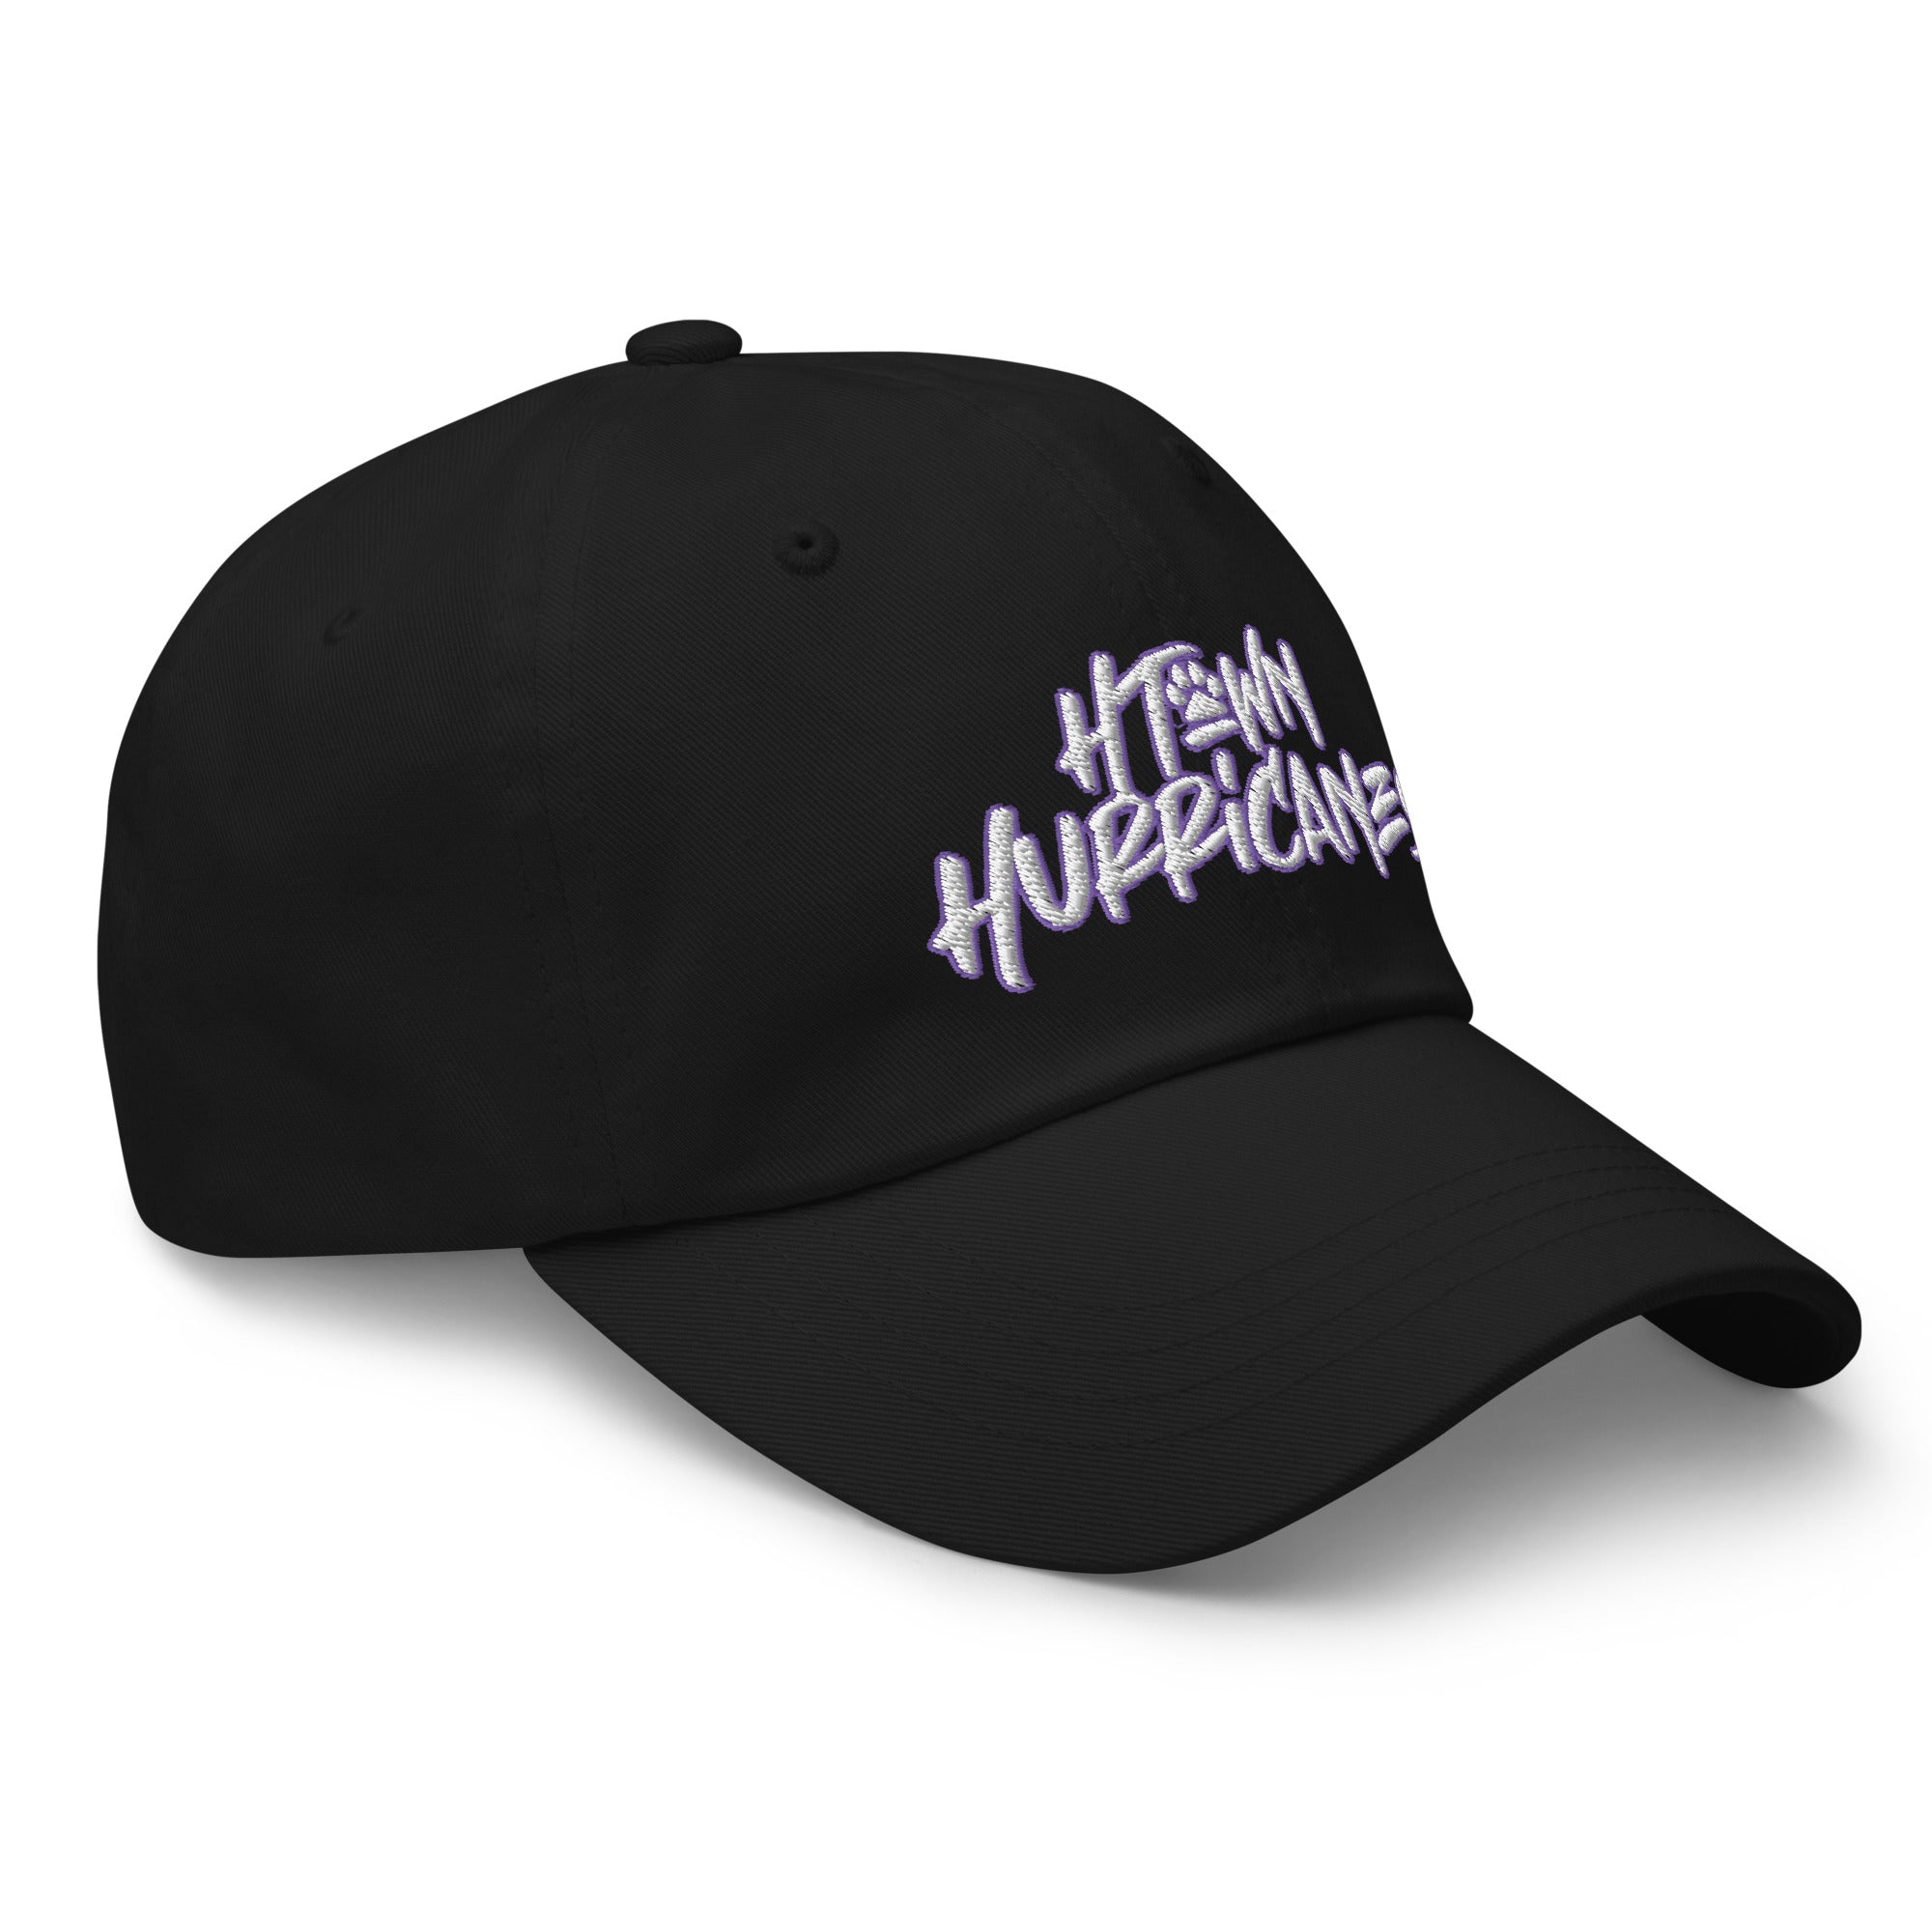 H-Town Hurricanes Dad hat